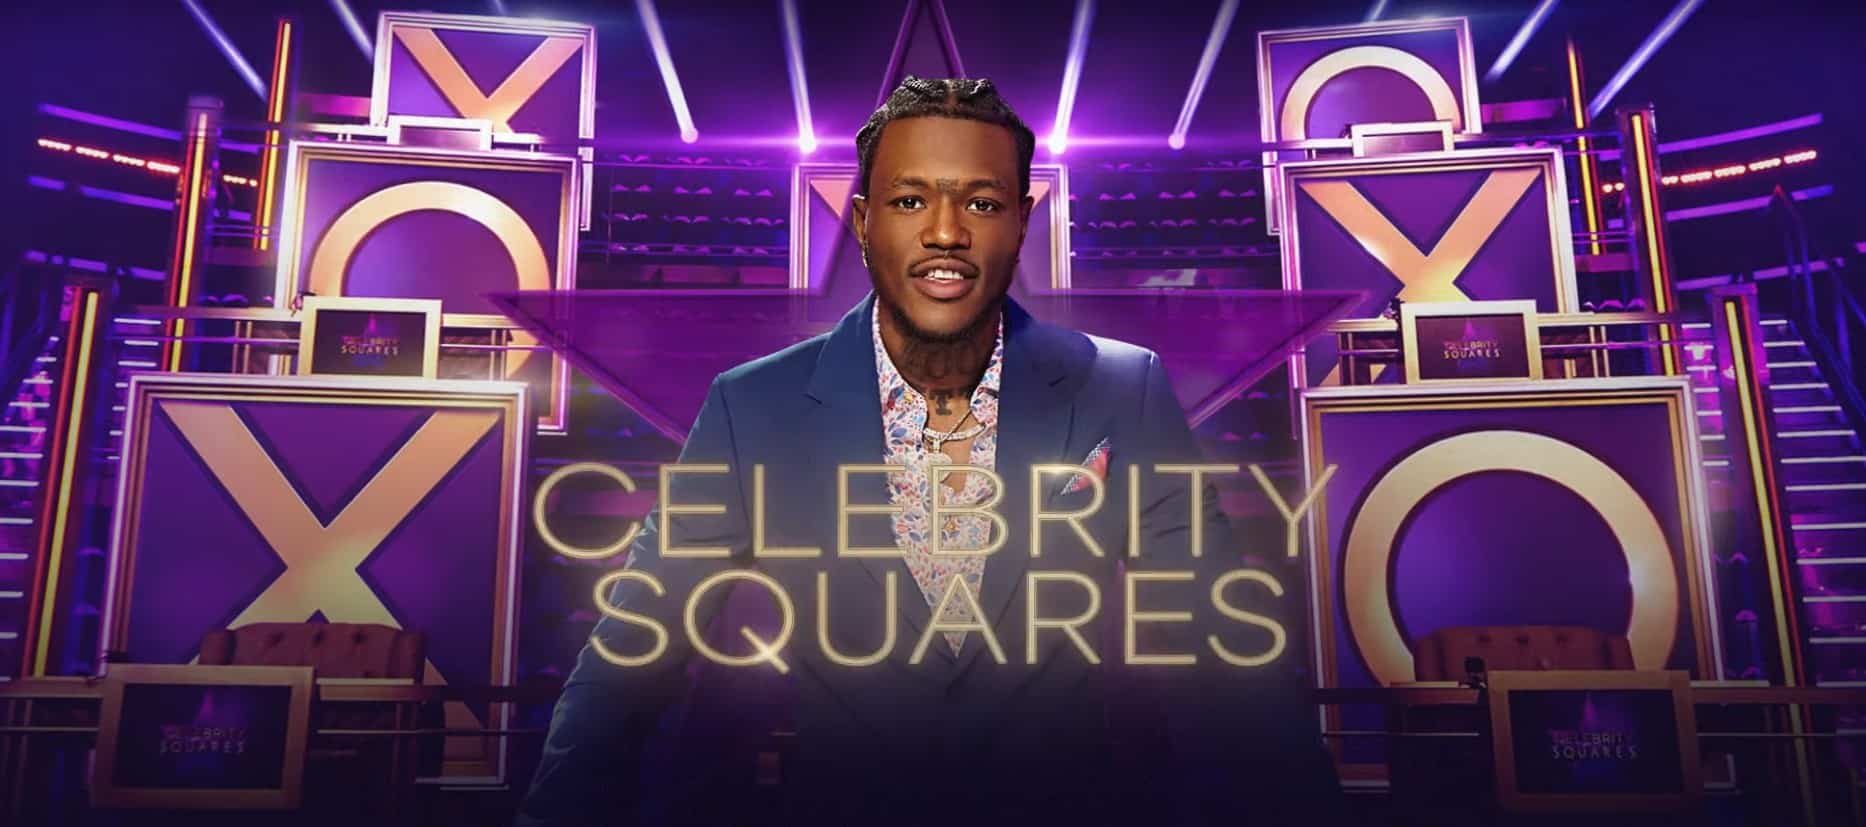 Celebrity Squares Episodes 5 & 6